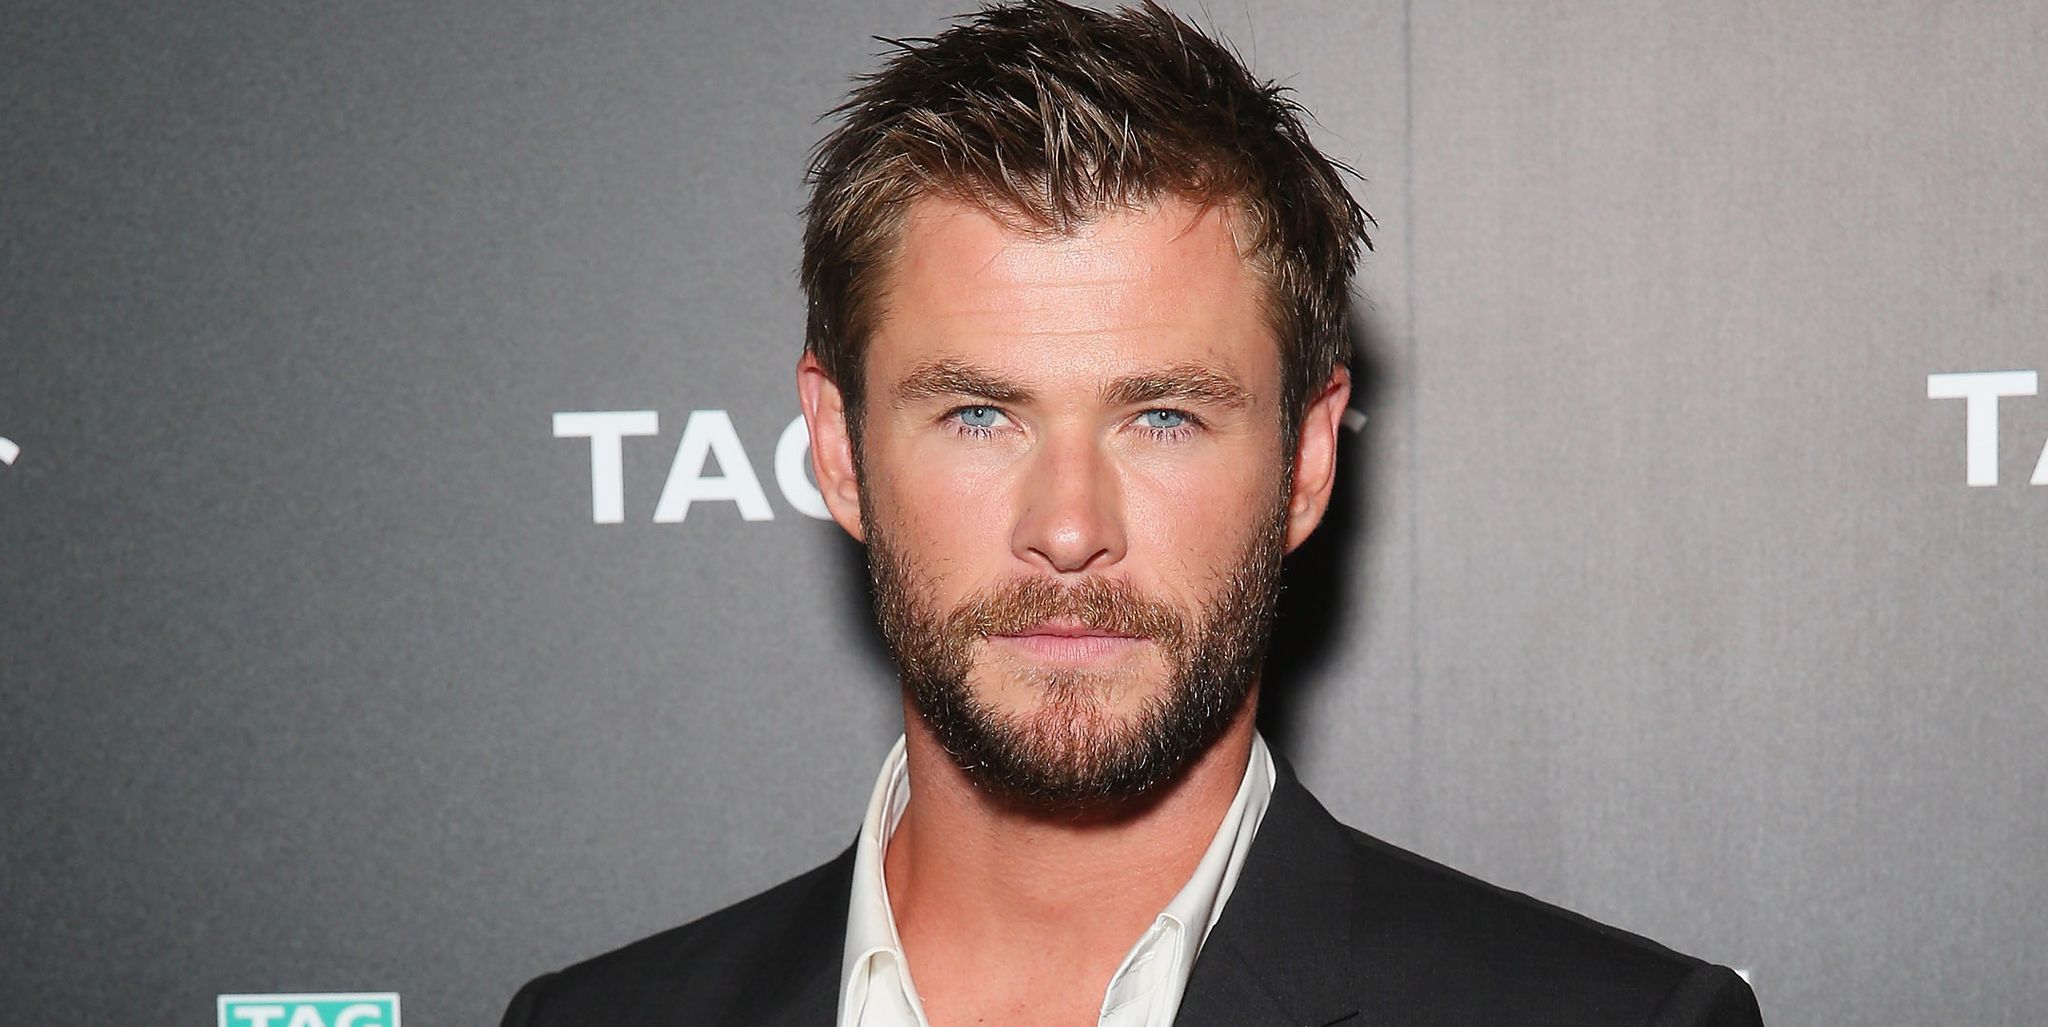 TAG Heuer Welcomes Chris Hemsworth As Ambassador